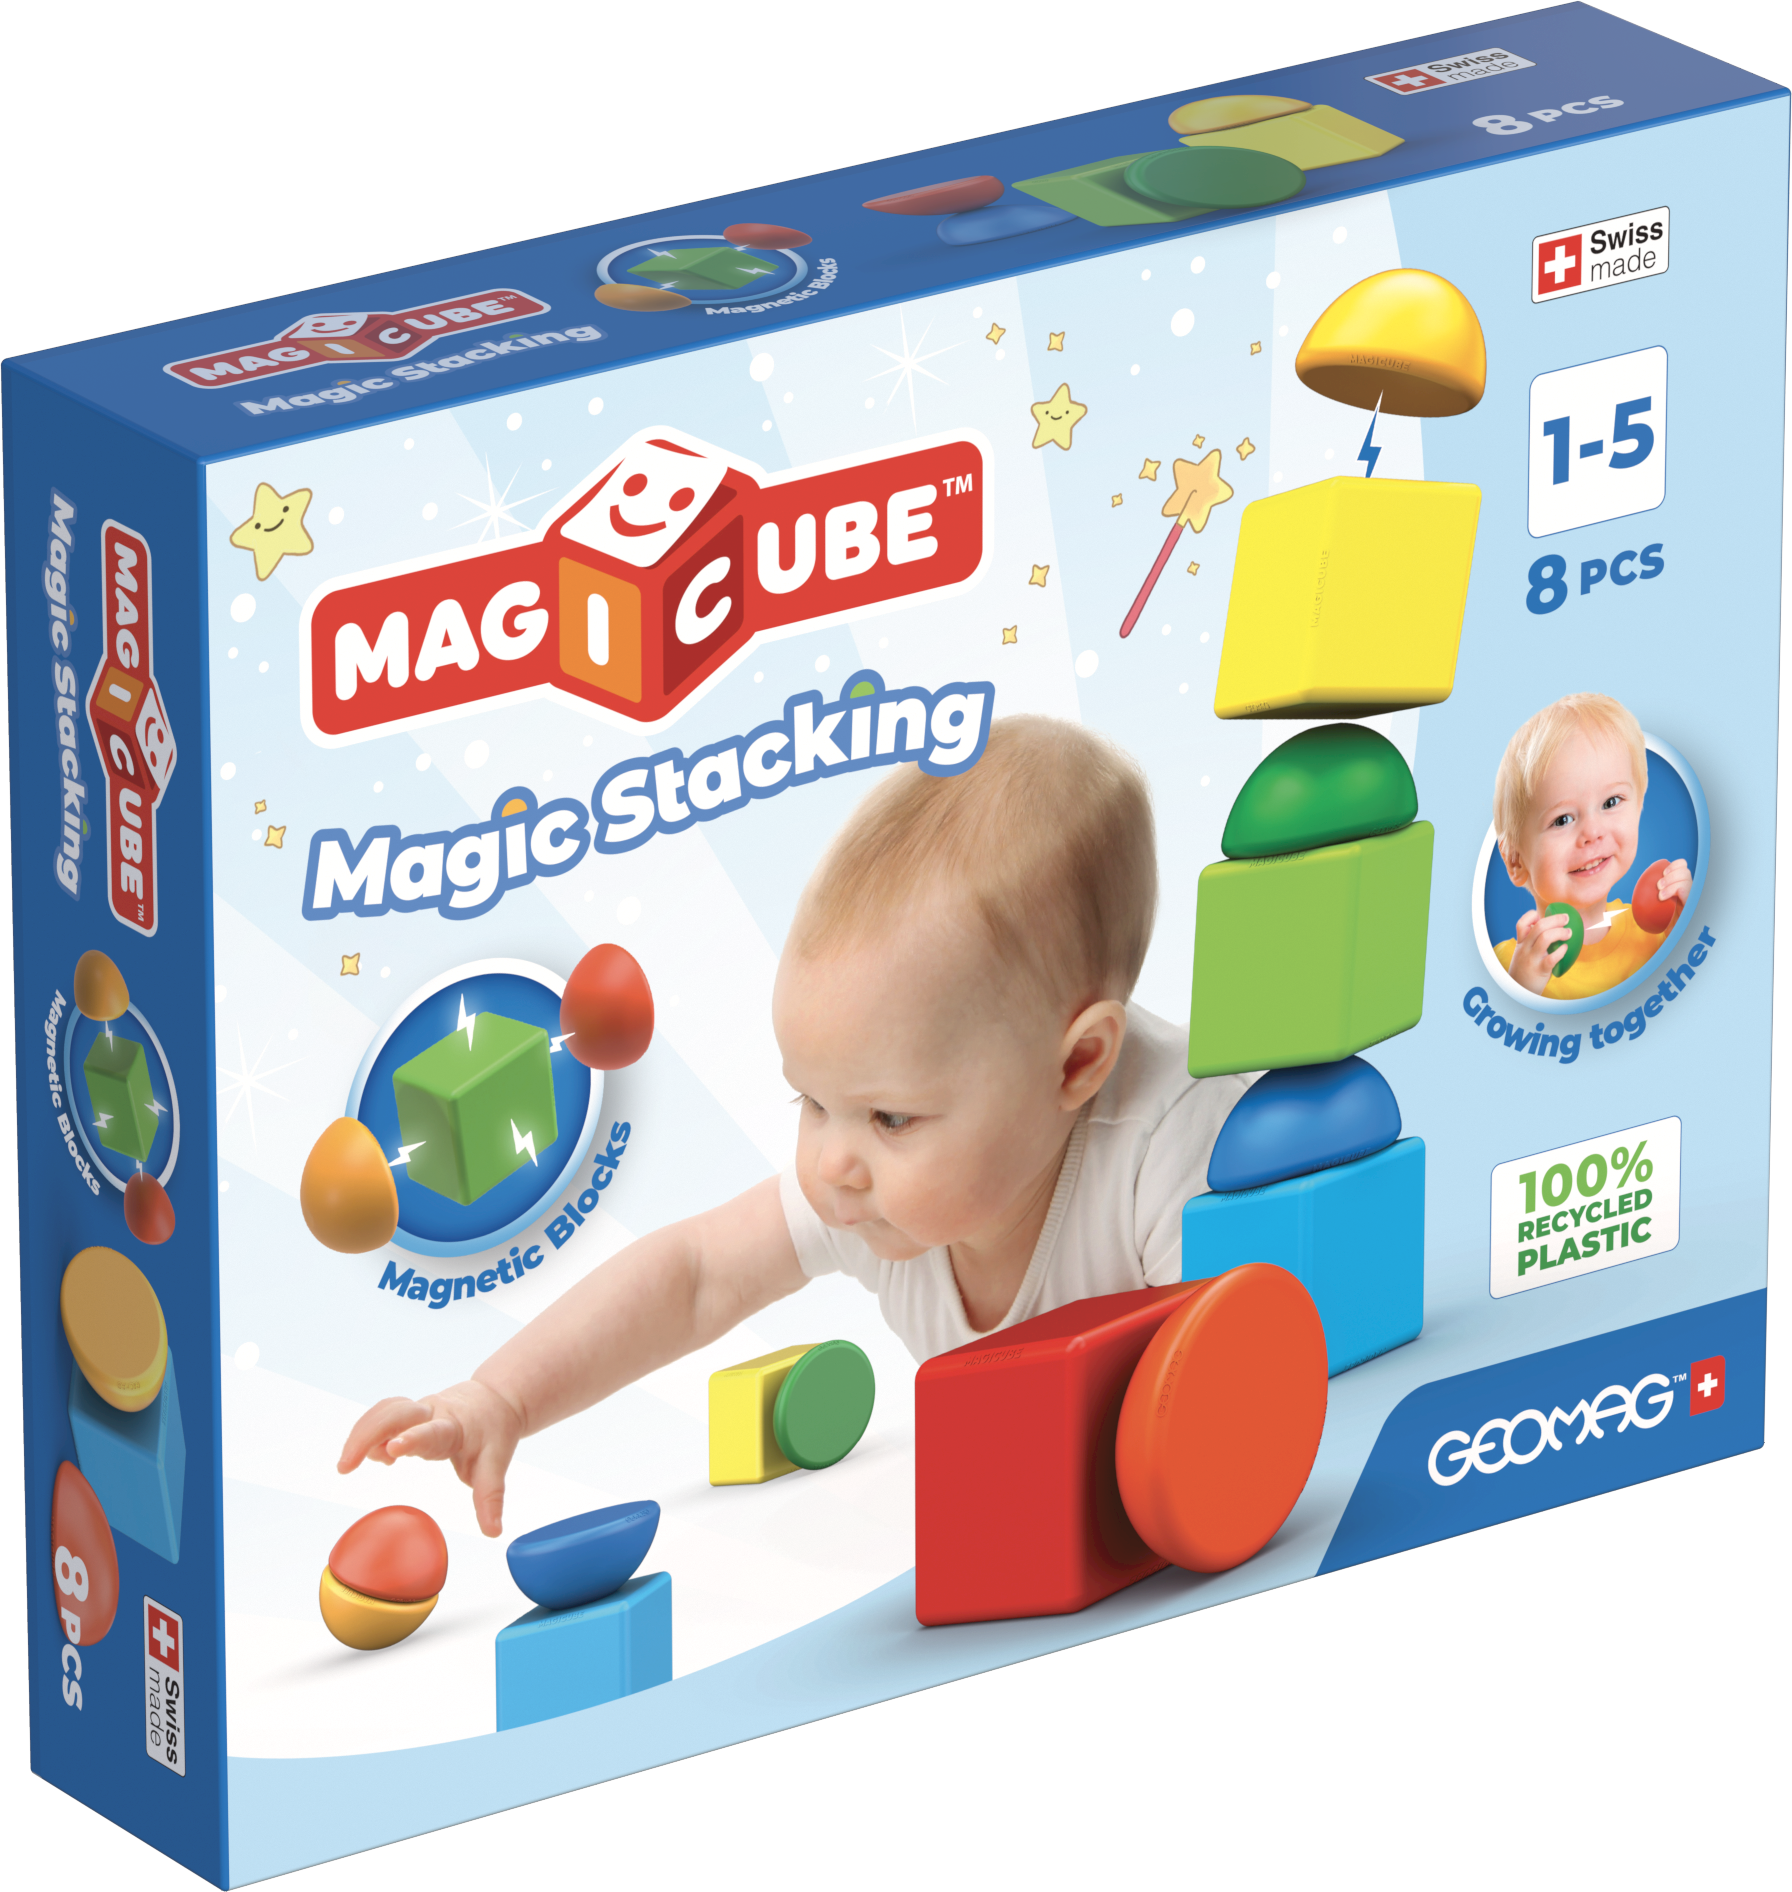 Geomag magicube magic blocks stacking - 8 pezzi - 100% recycled - Geomag